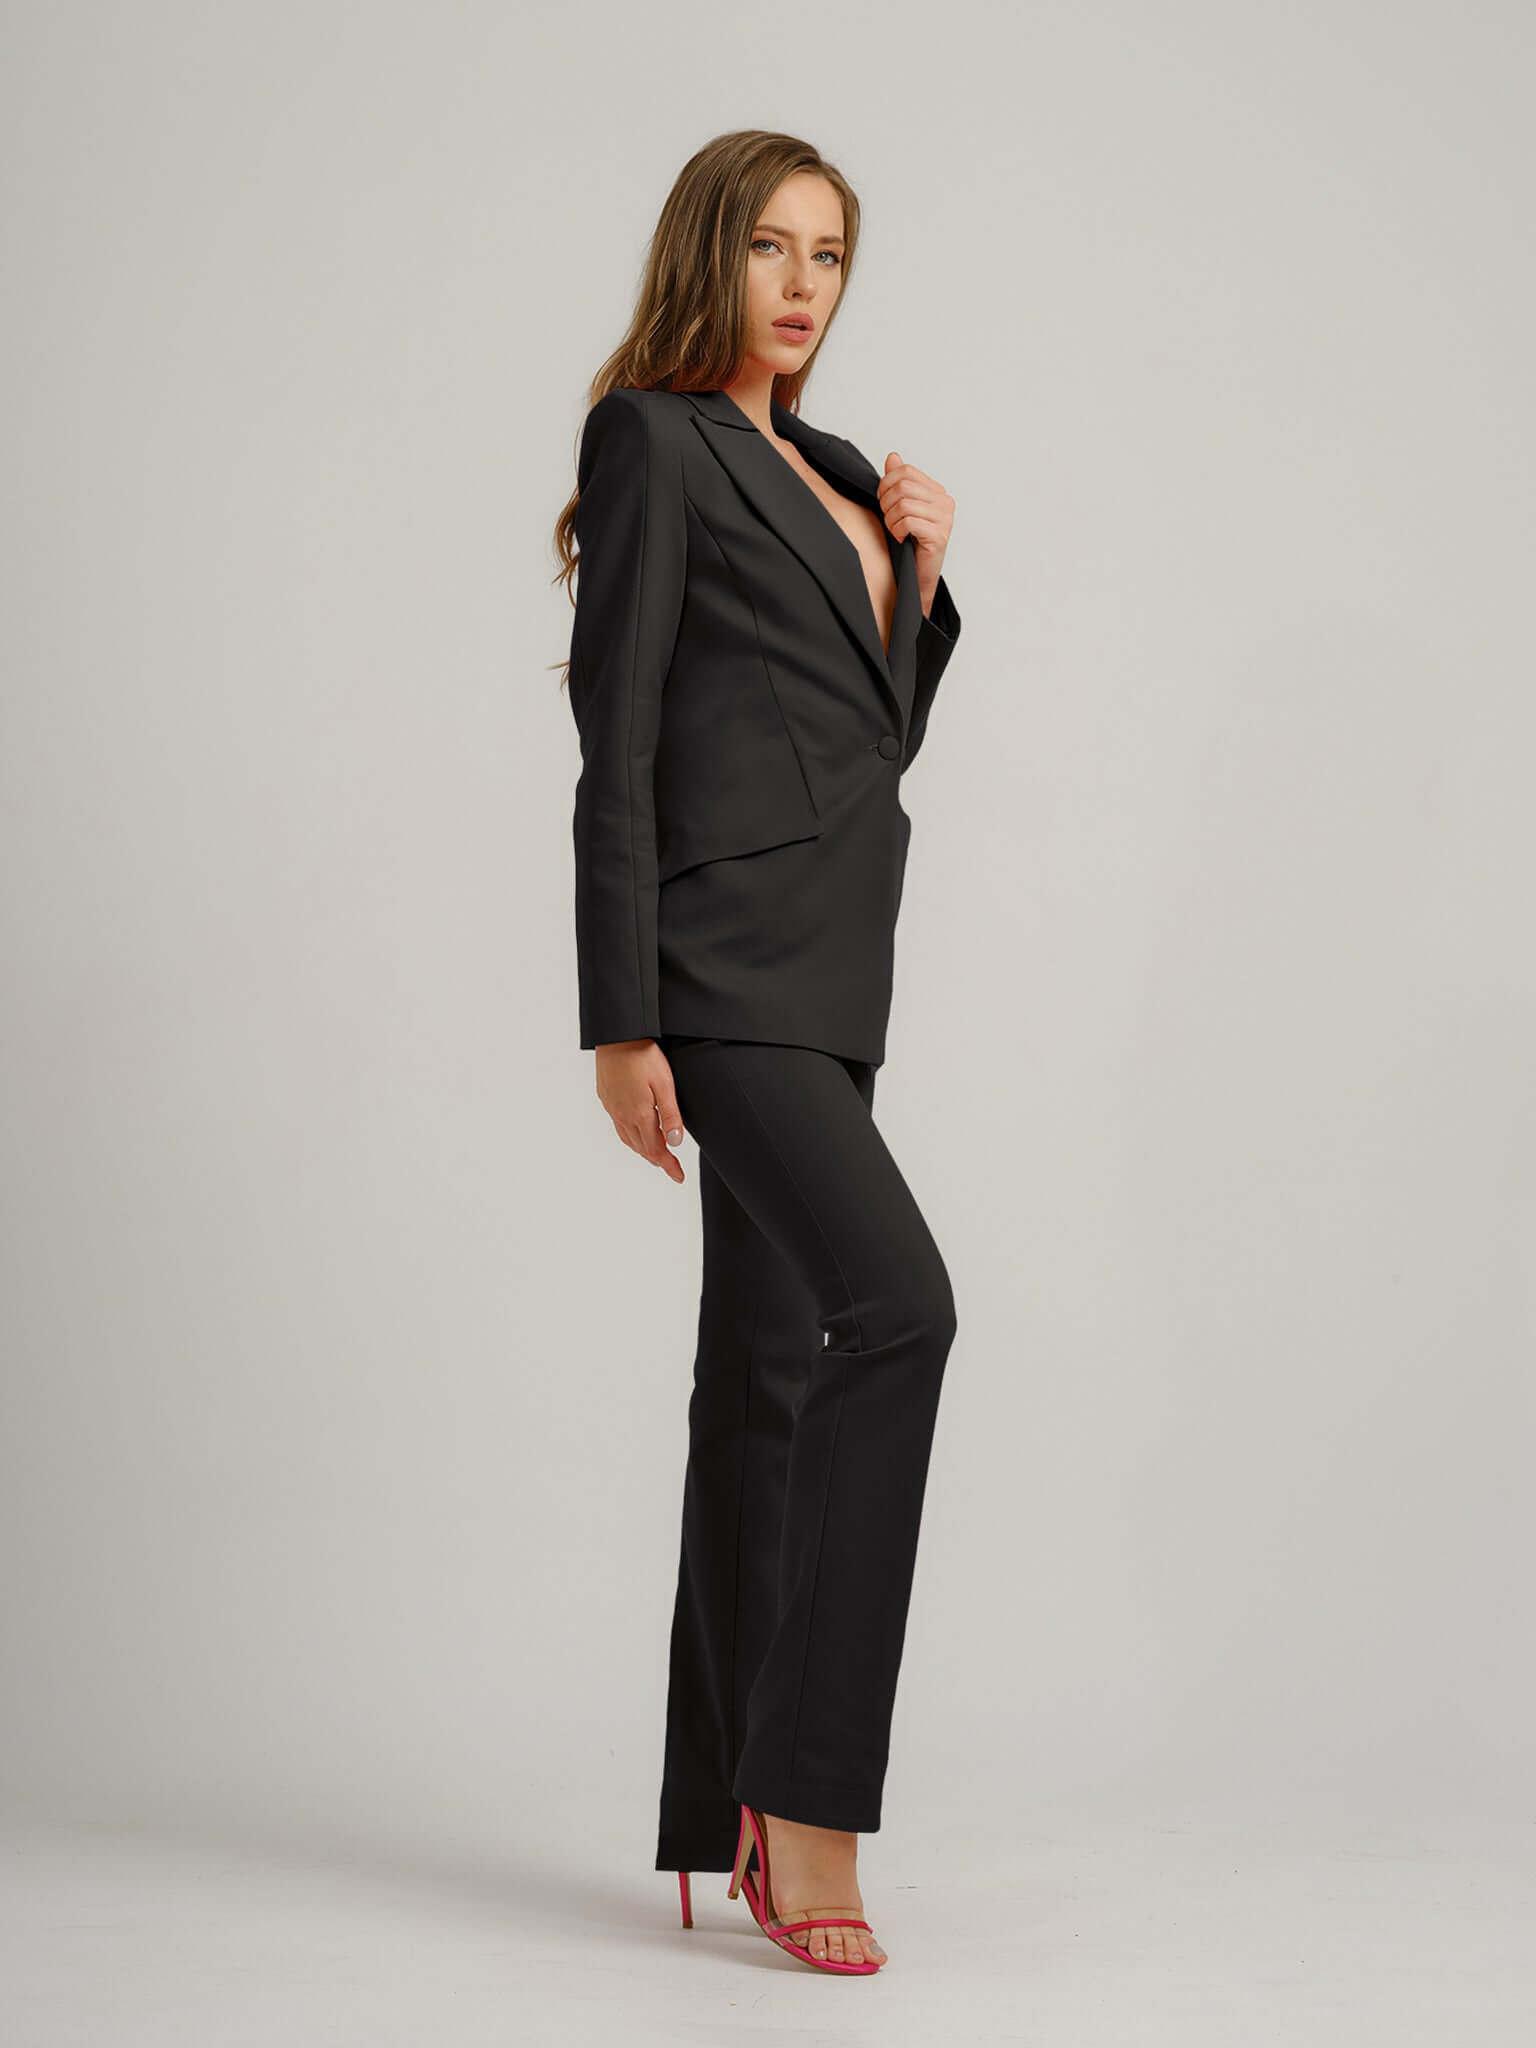 Fantasy Tailored Blazer - Black by Tia Dorraine Women's Luxury Fashion Designer Clothing Brand